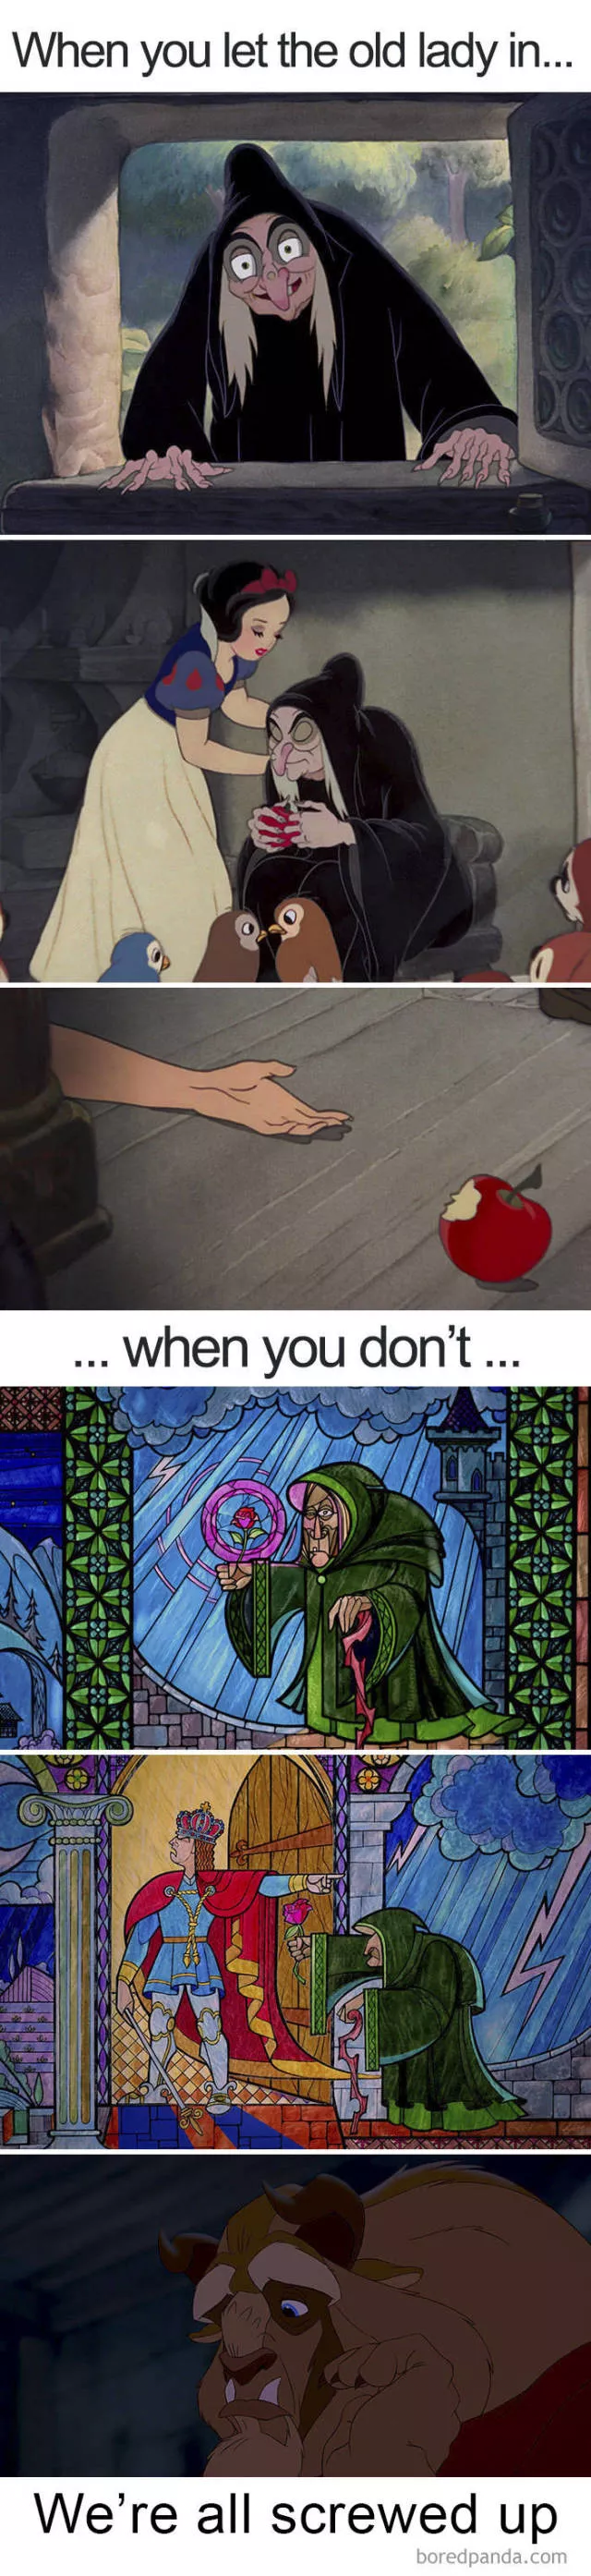 Disney memes - #11 